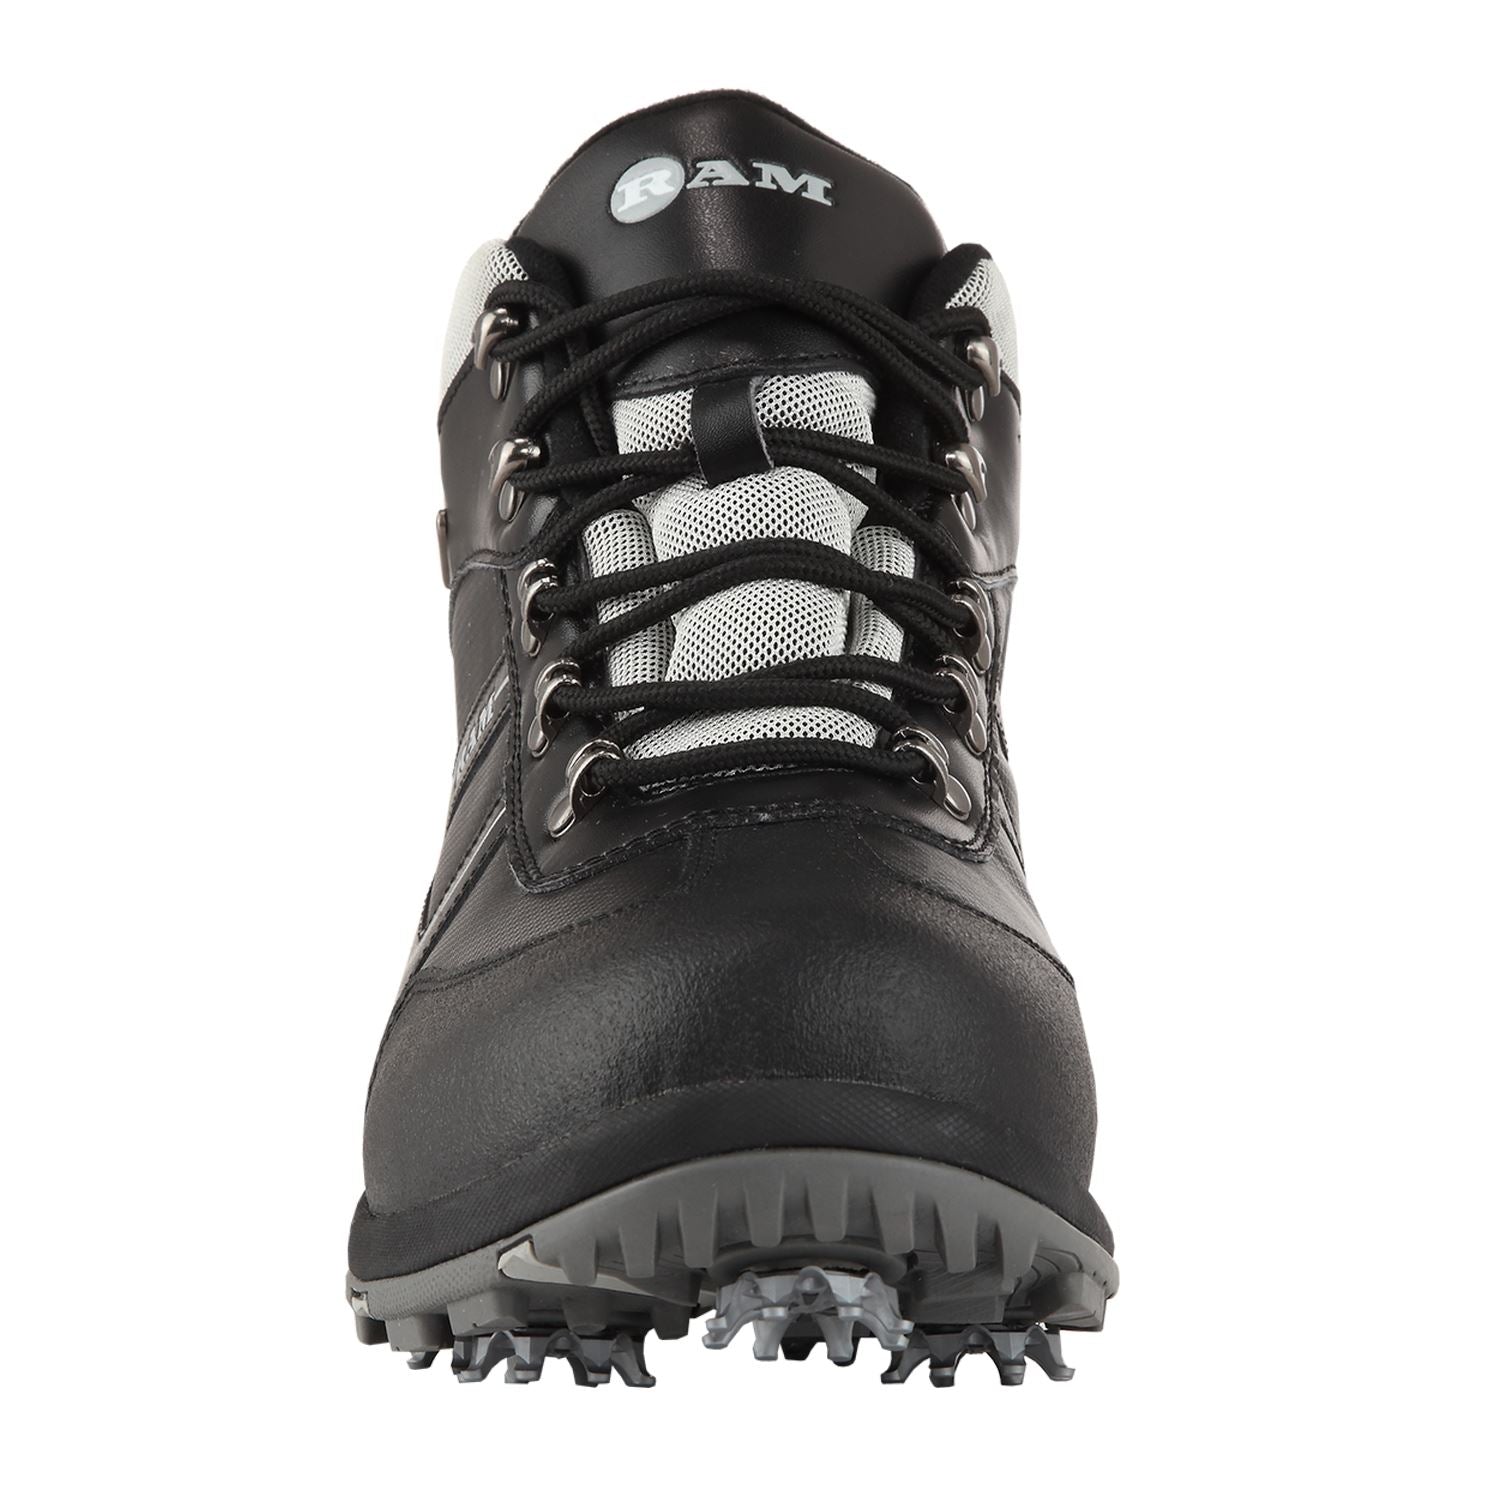 Ram Golf Waterproof Winter Leather Golf Boots